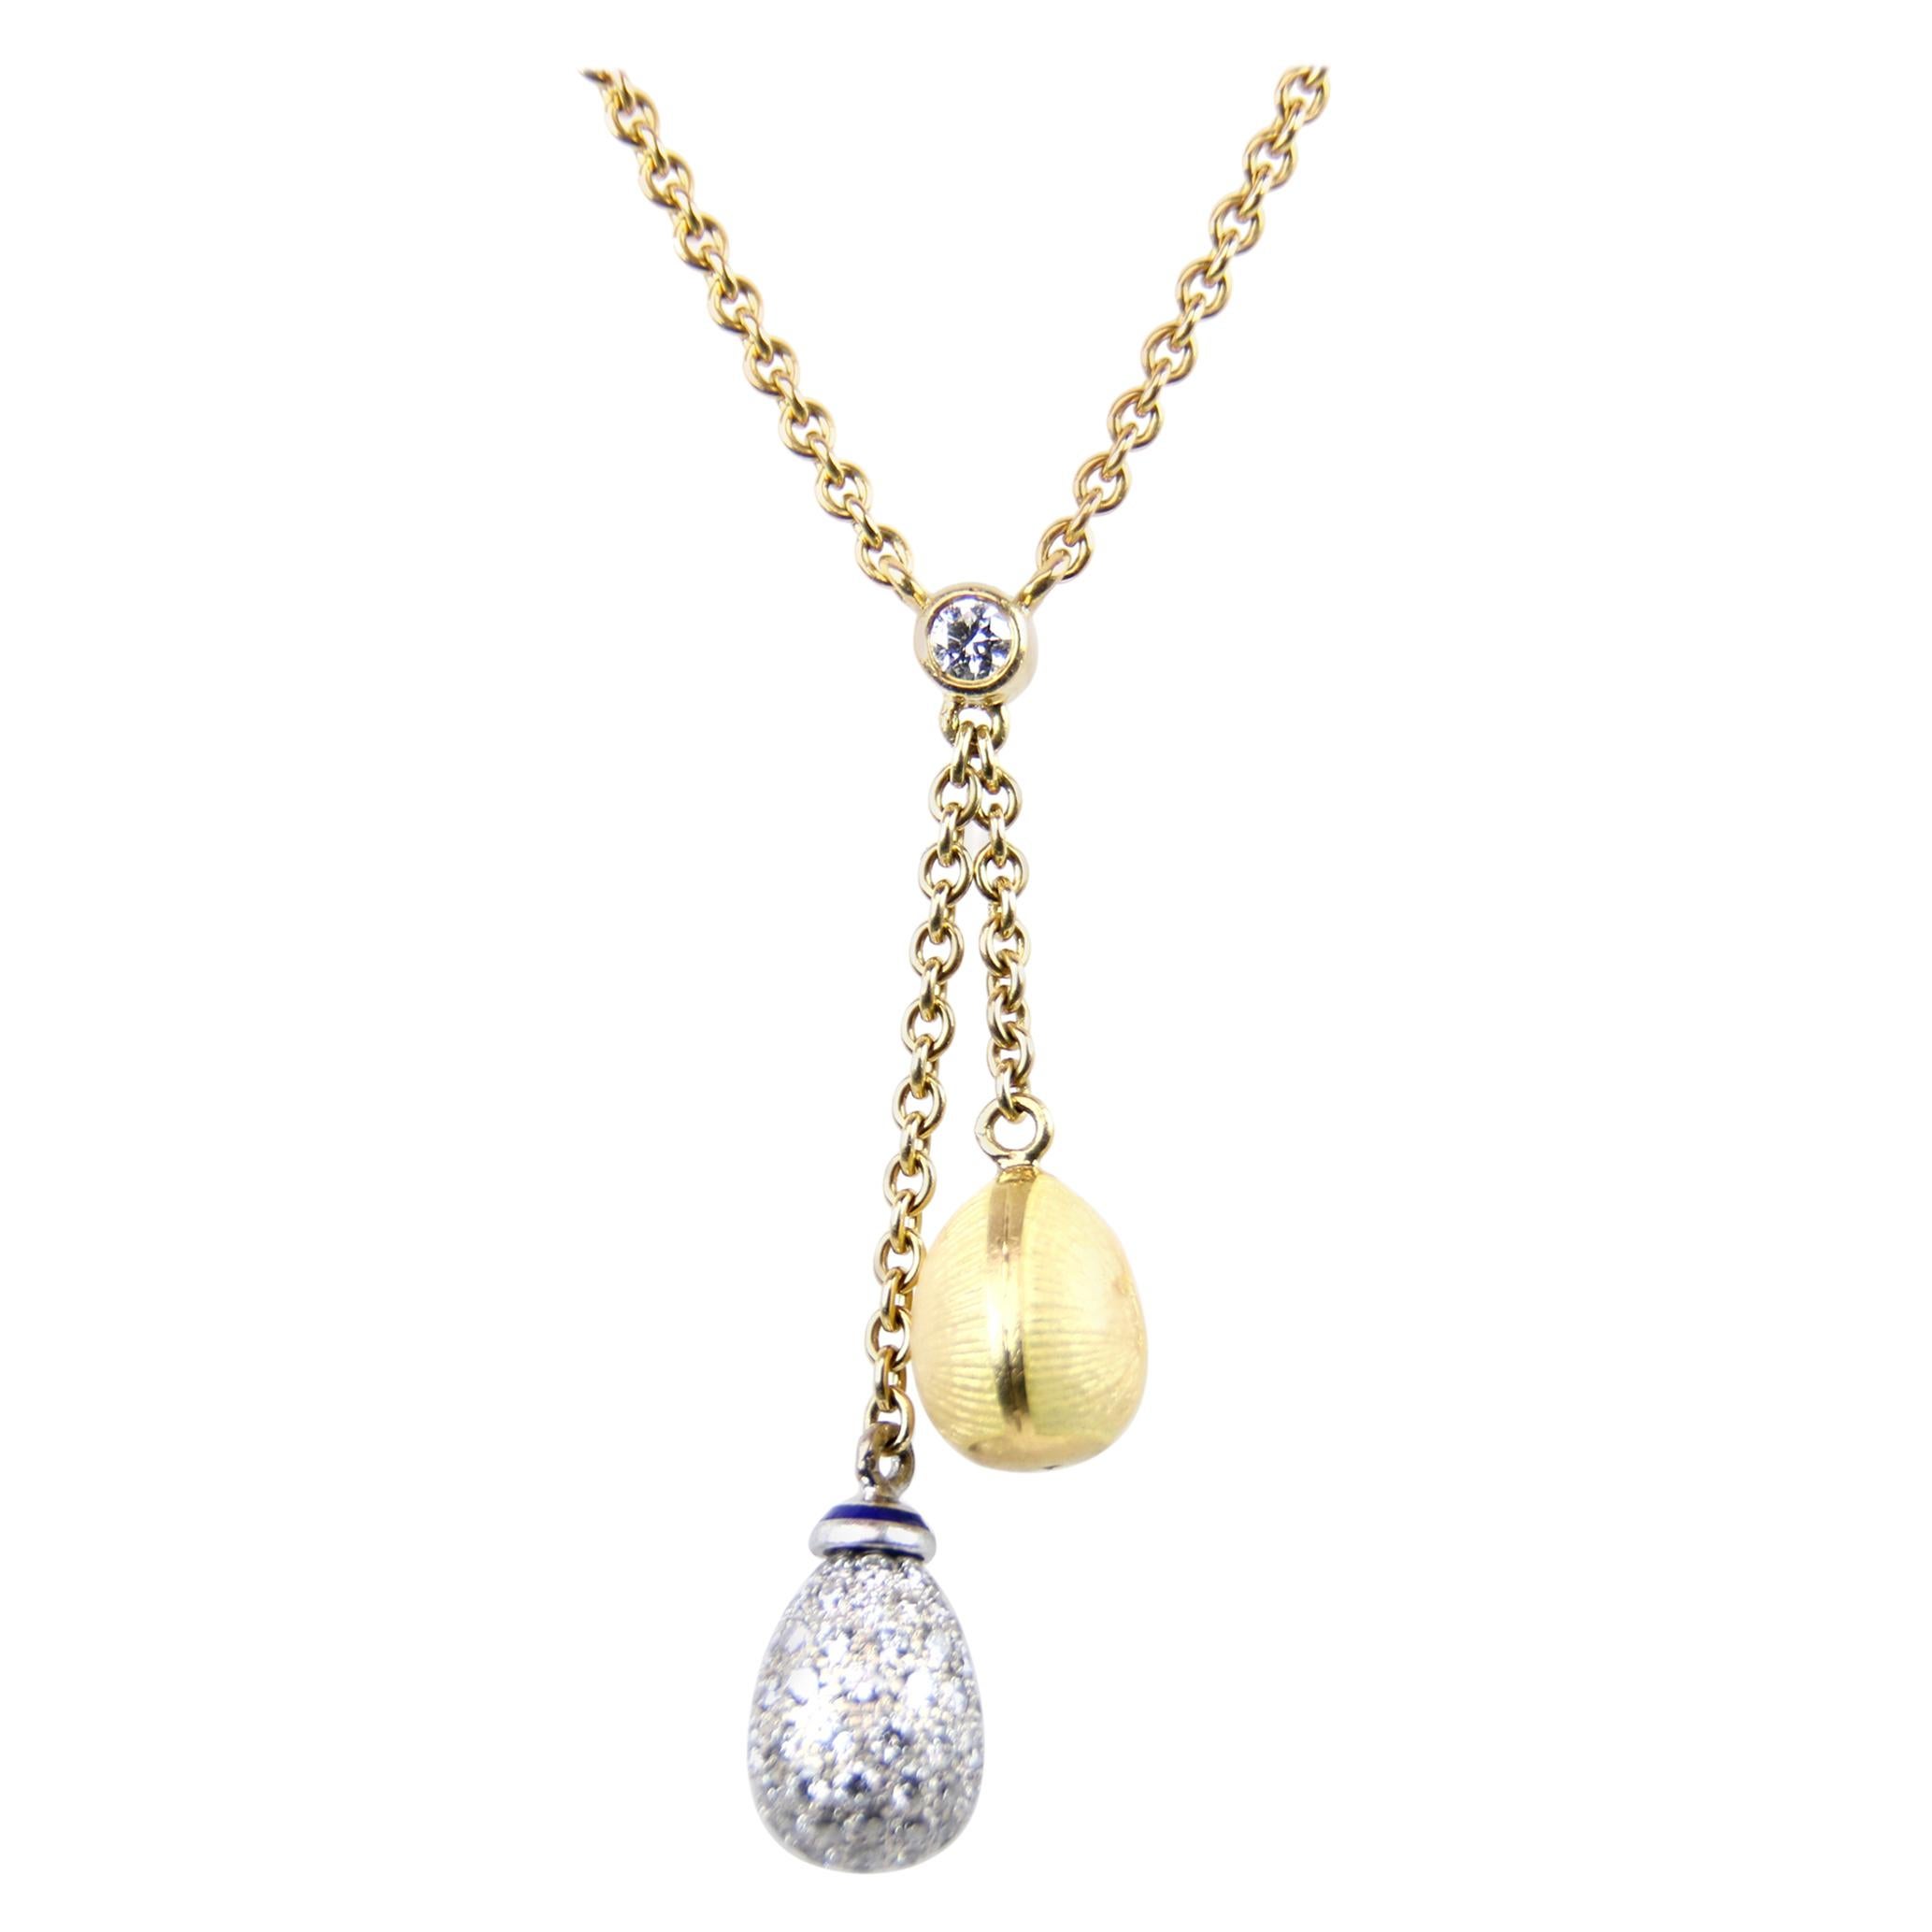 Faberge 18 Karat Gold and Diamond Egg Necklace